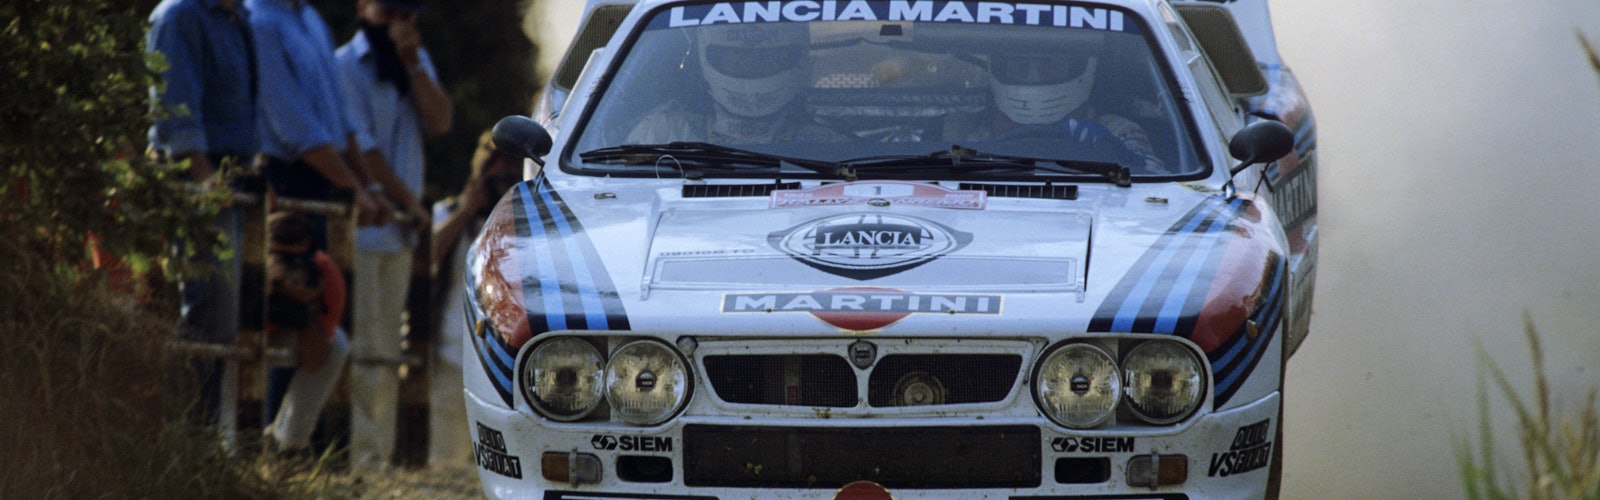 1985 Sanremo Rallycopyright:Mcklein